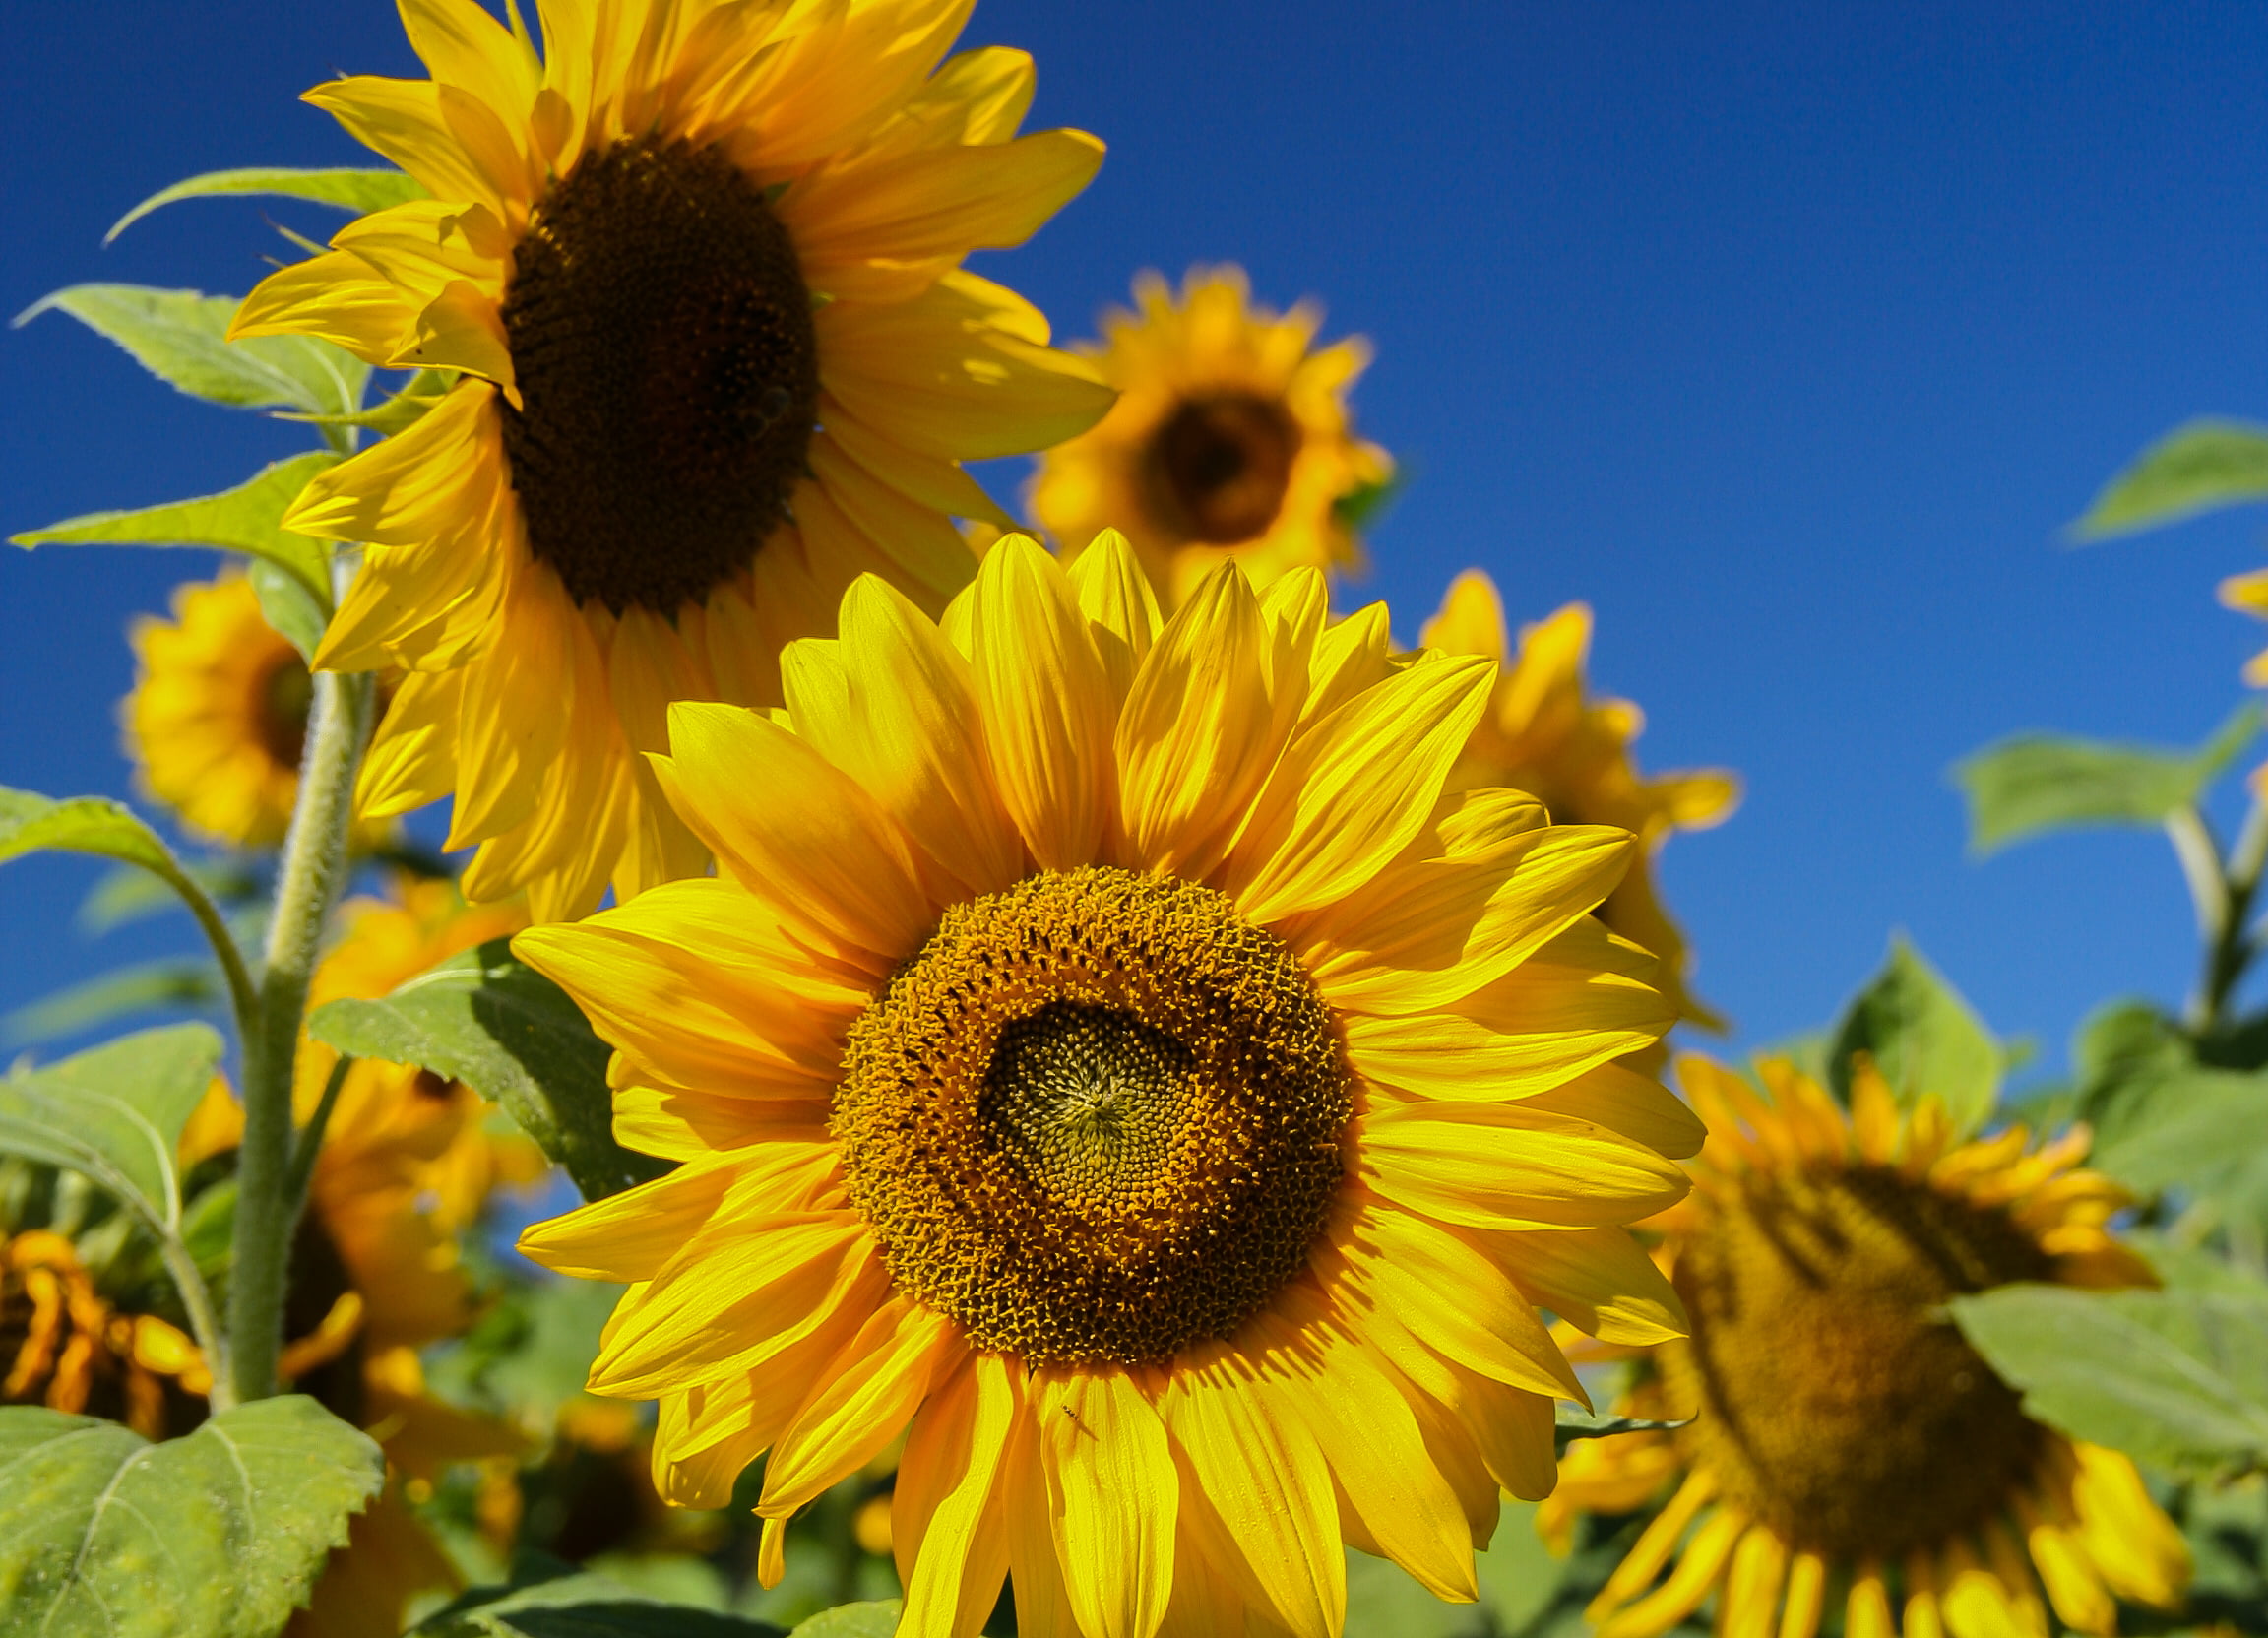 Sunflower under blue sky during daytime HD wallpaper ...